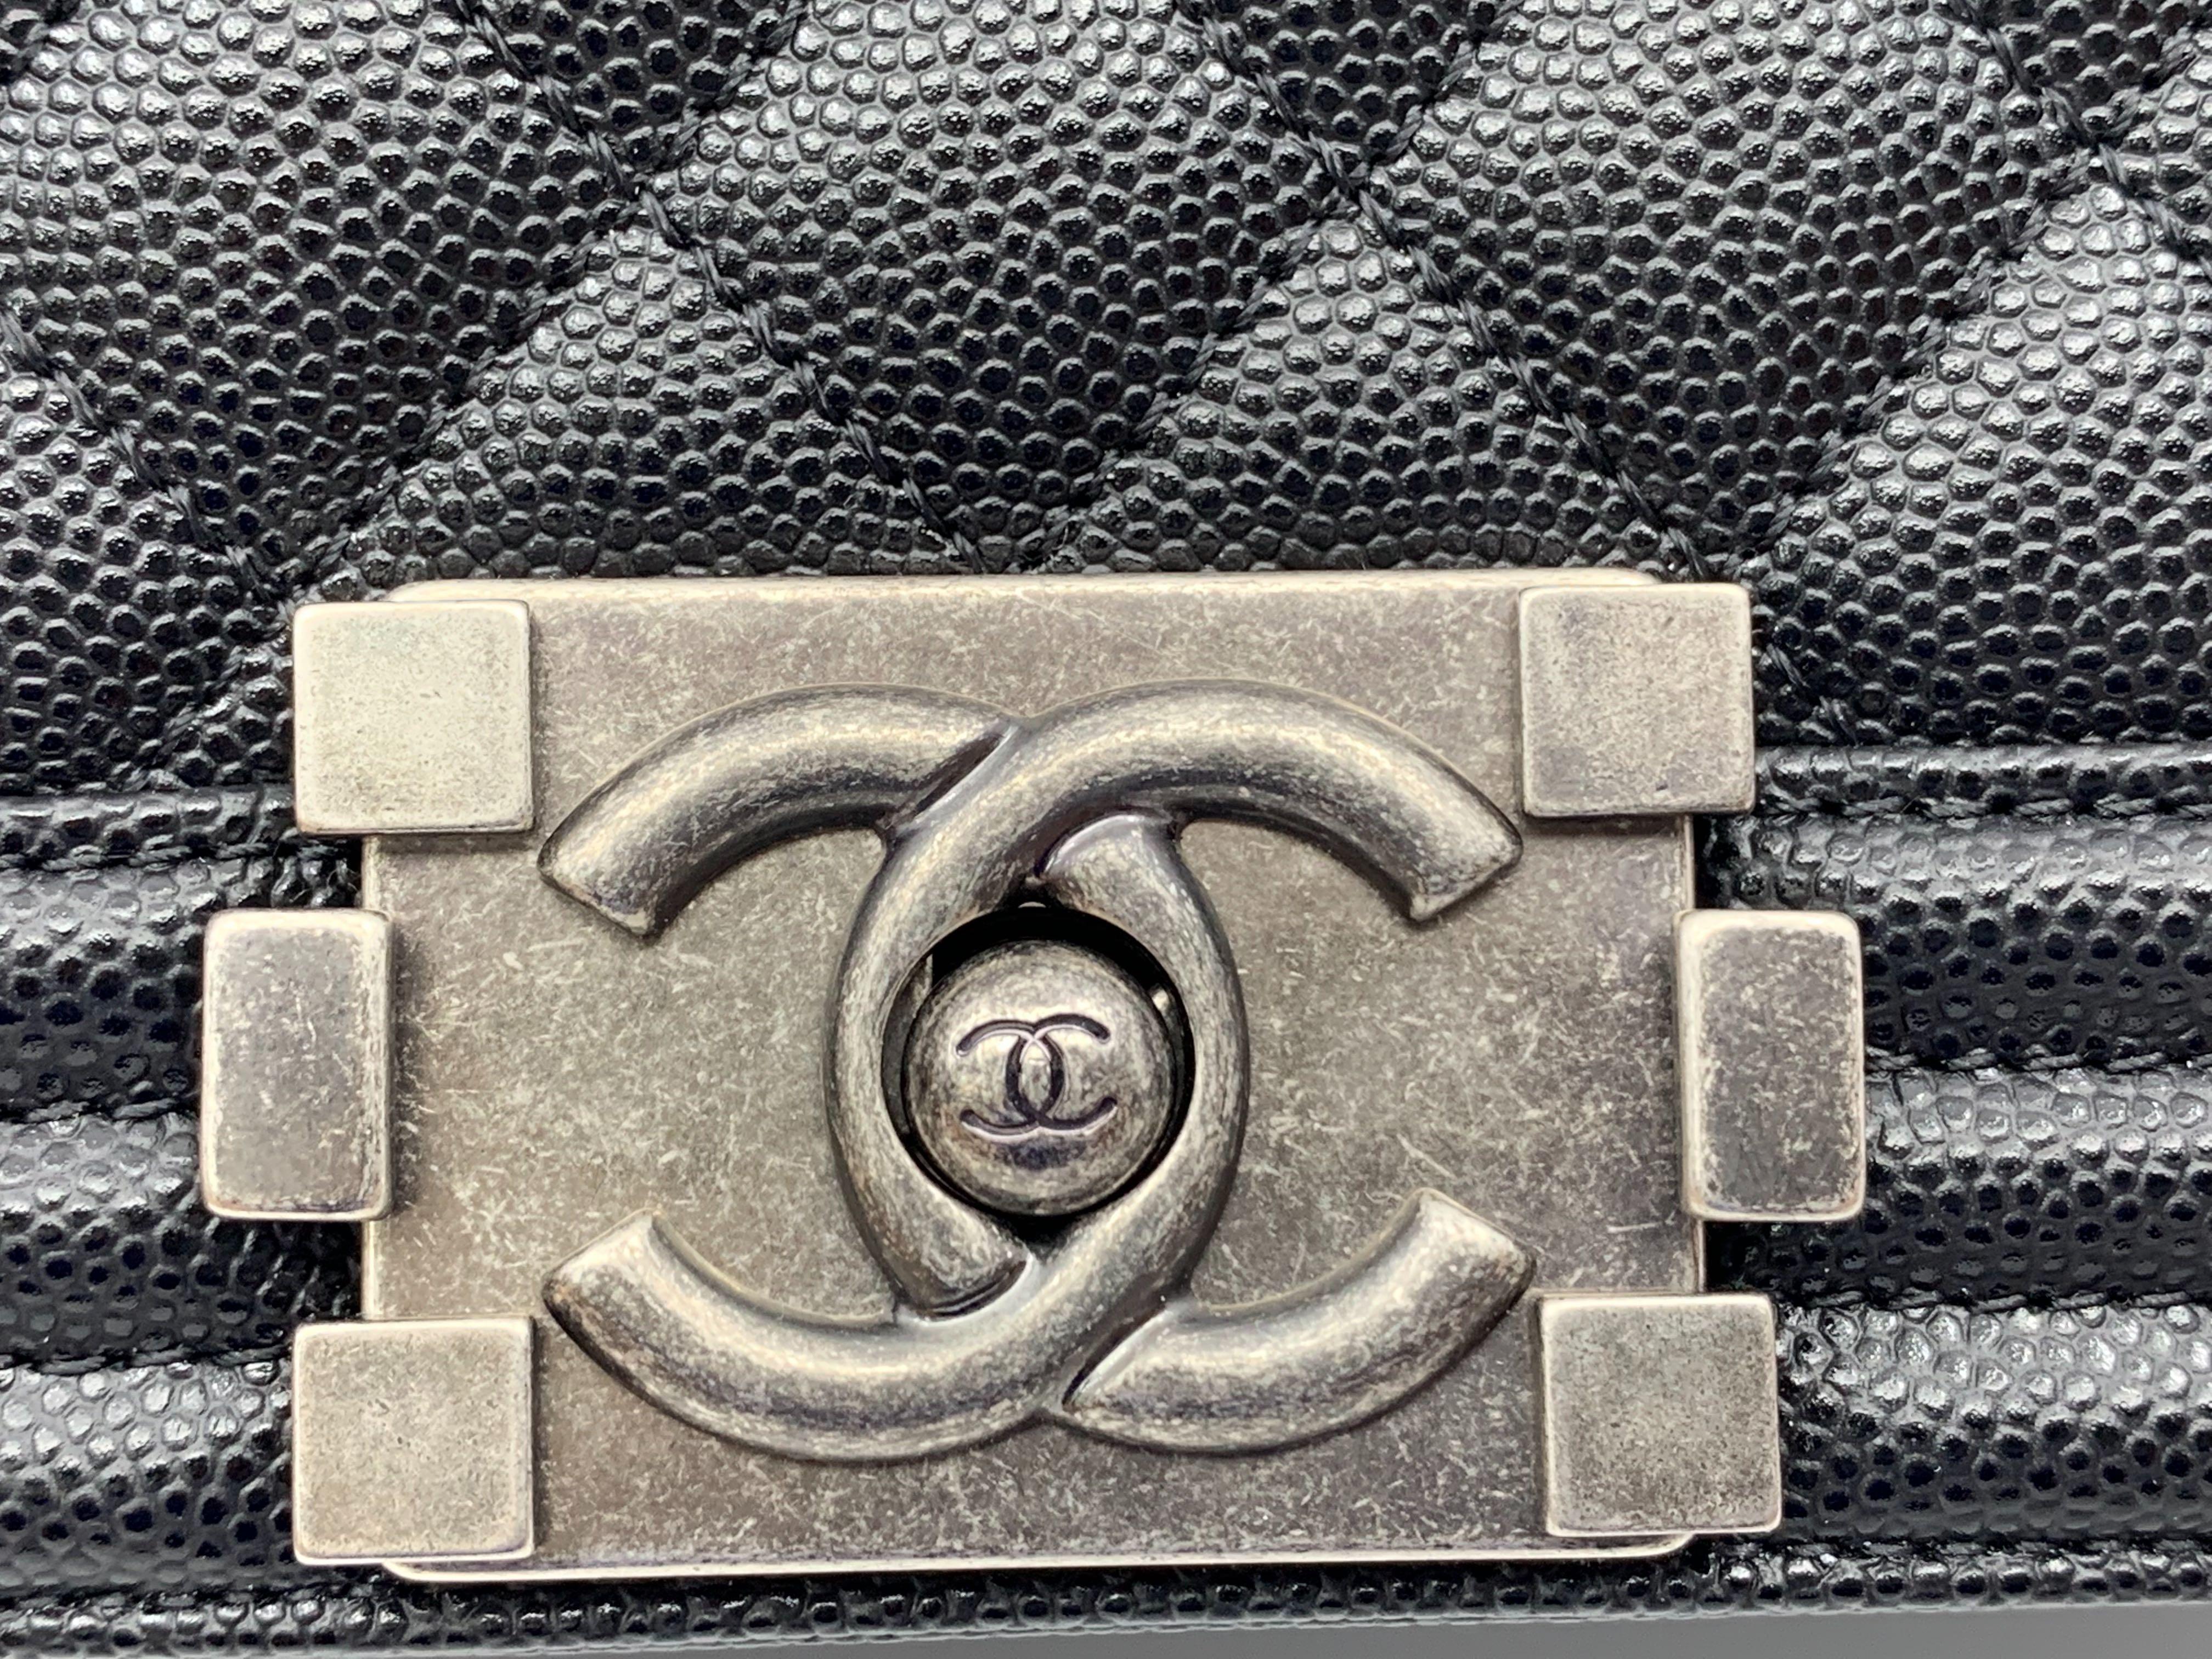 Chanel Boy Ruthenium Finish Medium Black Quilted Leather Bag A67086 Y83338 94305 1